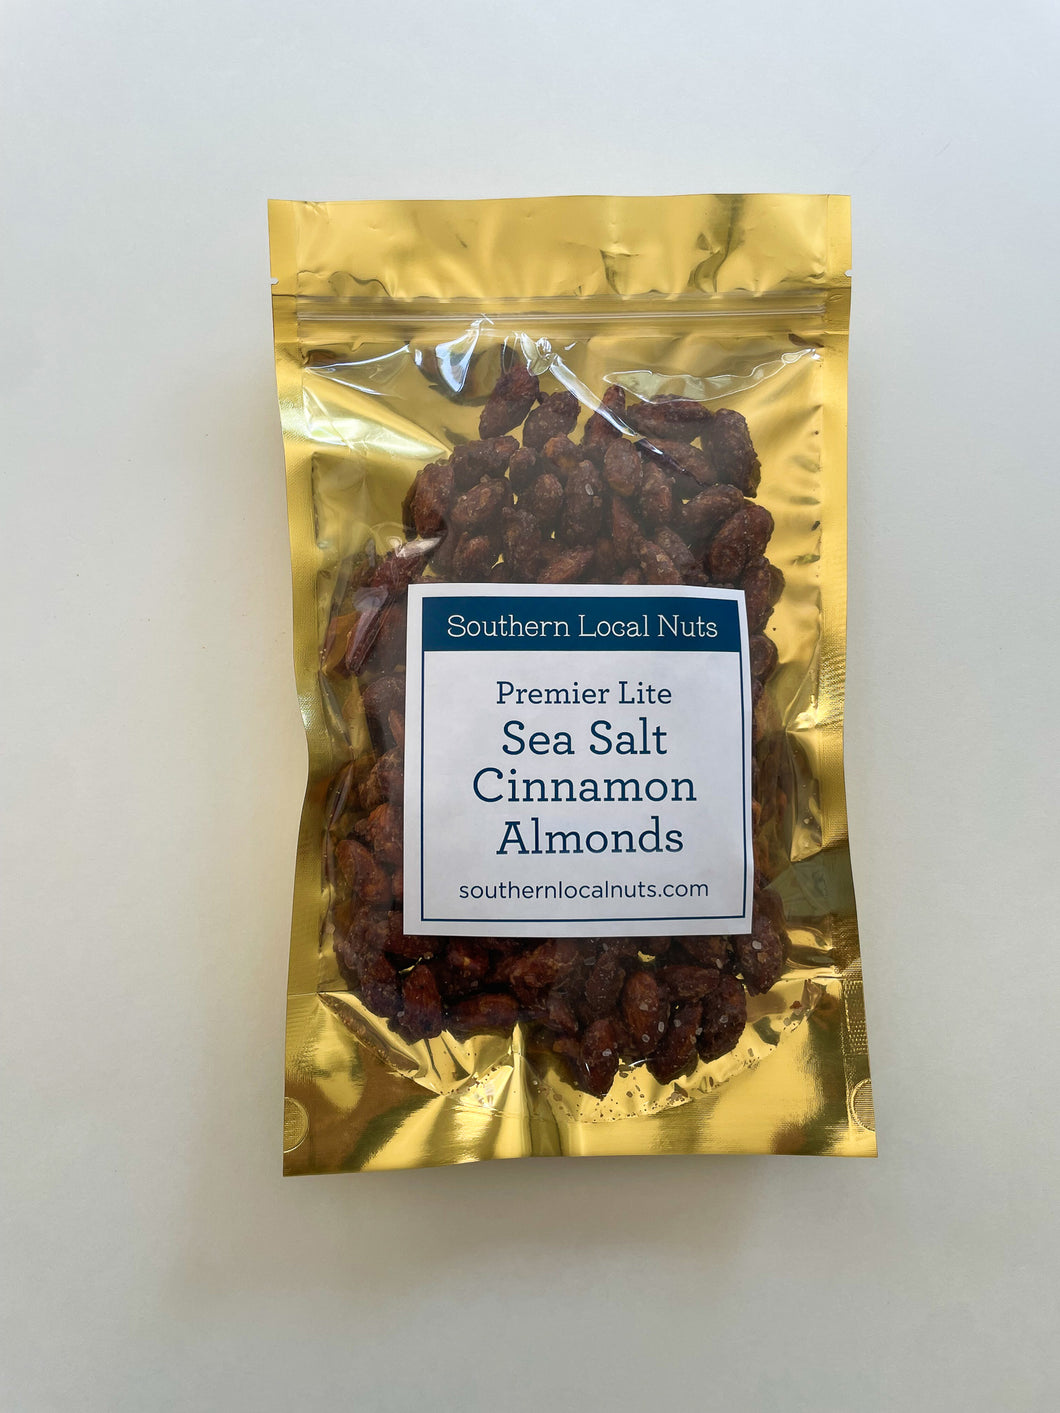 Premier Lite Sea Salt Cinnamon Almonds